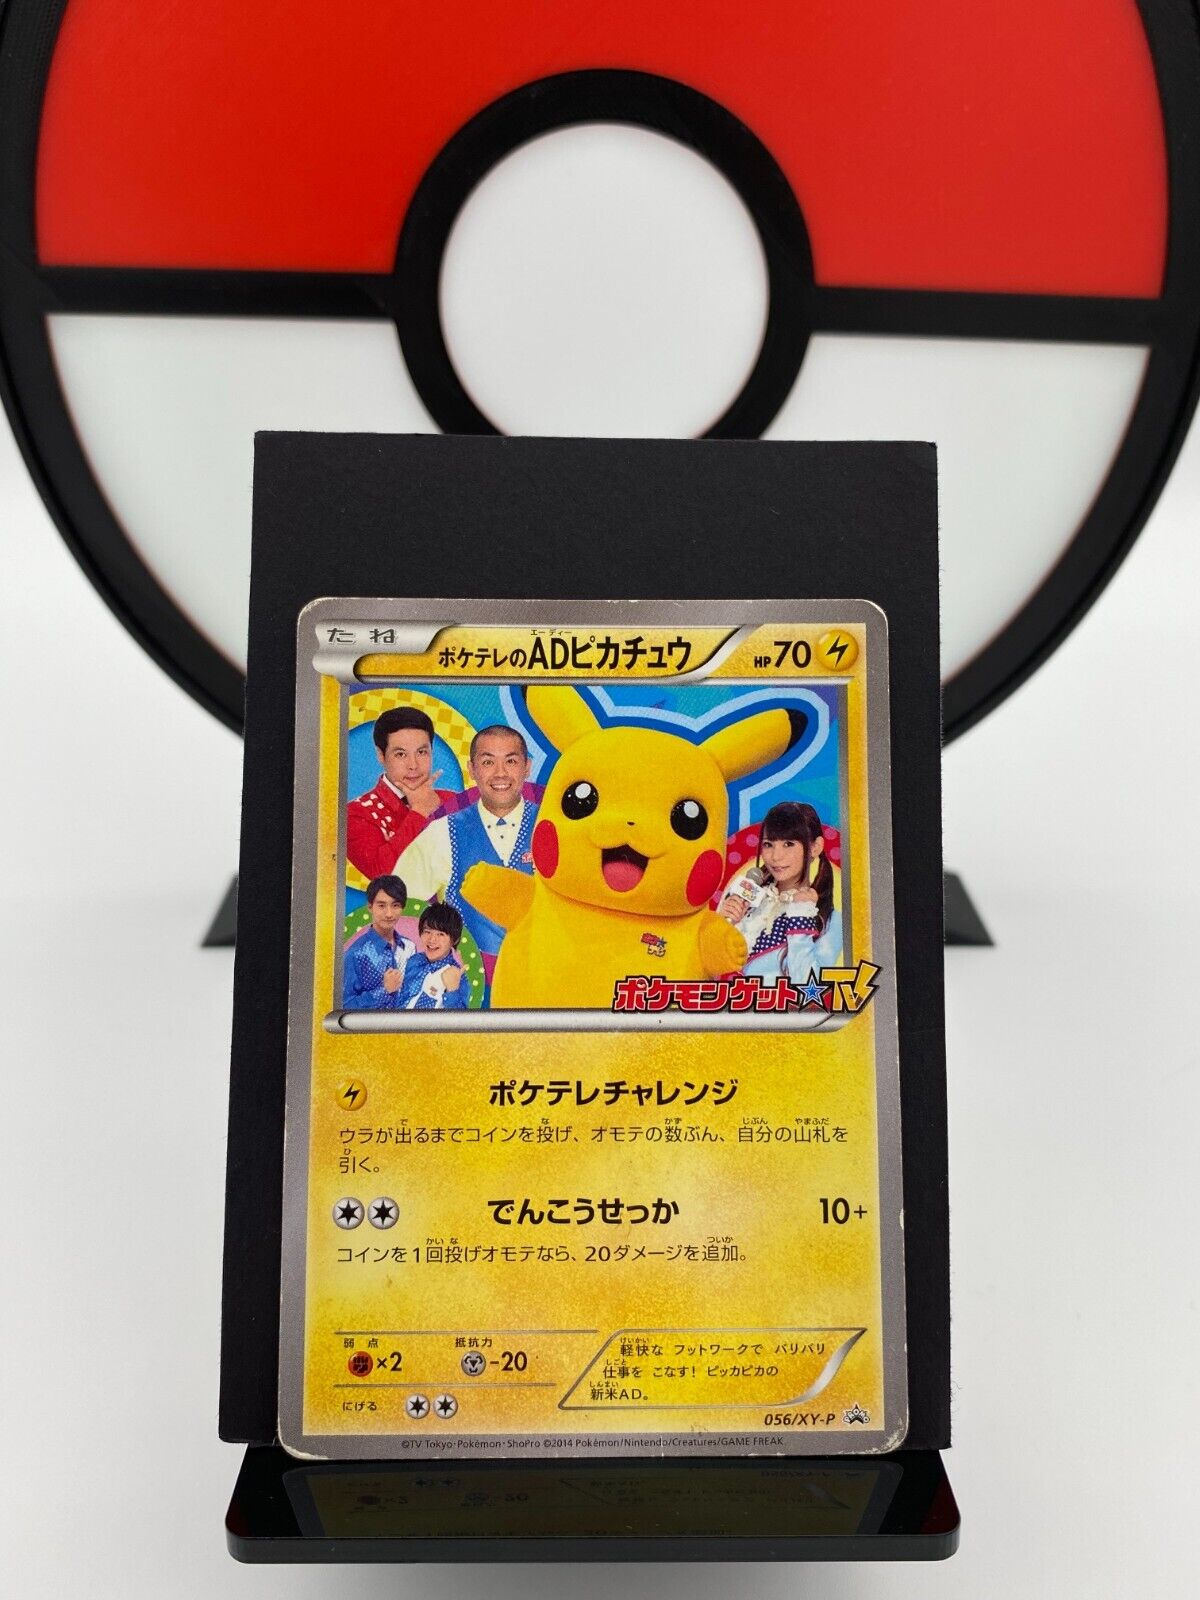 PokeTV\'s Pikachu 056/XY-P AD Promo Prize 2014 Pokemon Card | Japanese | HP+